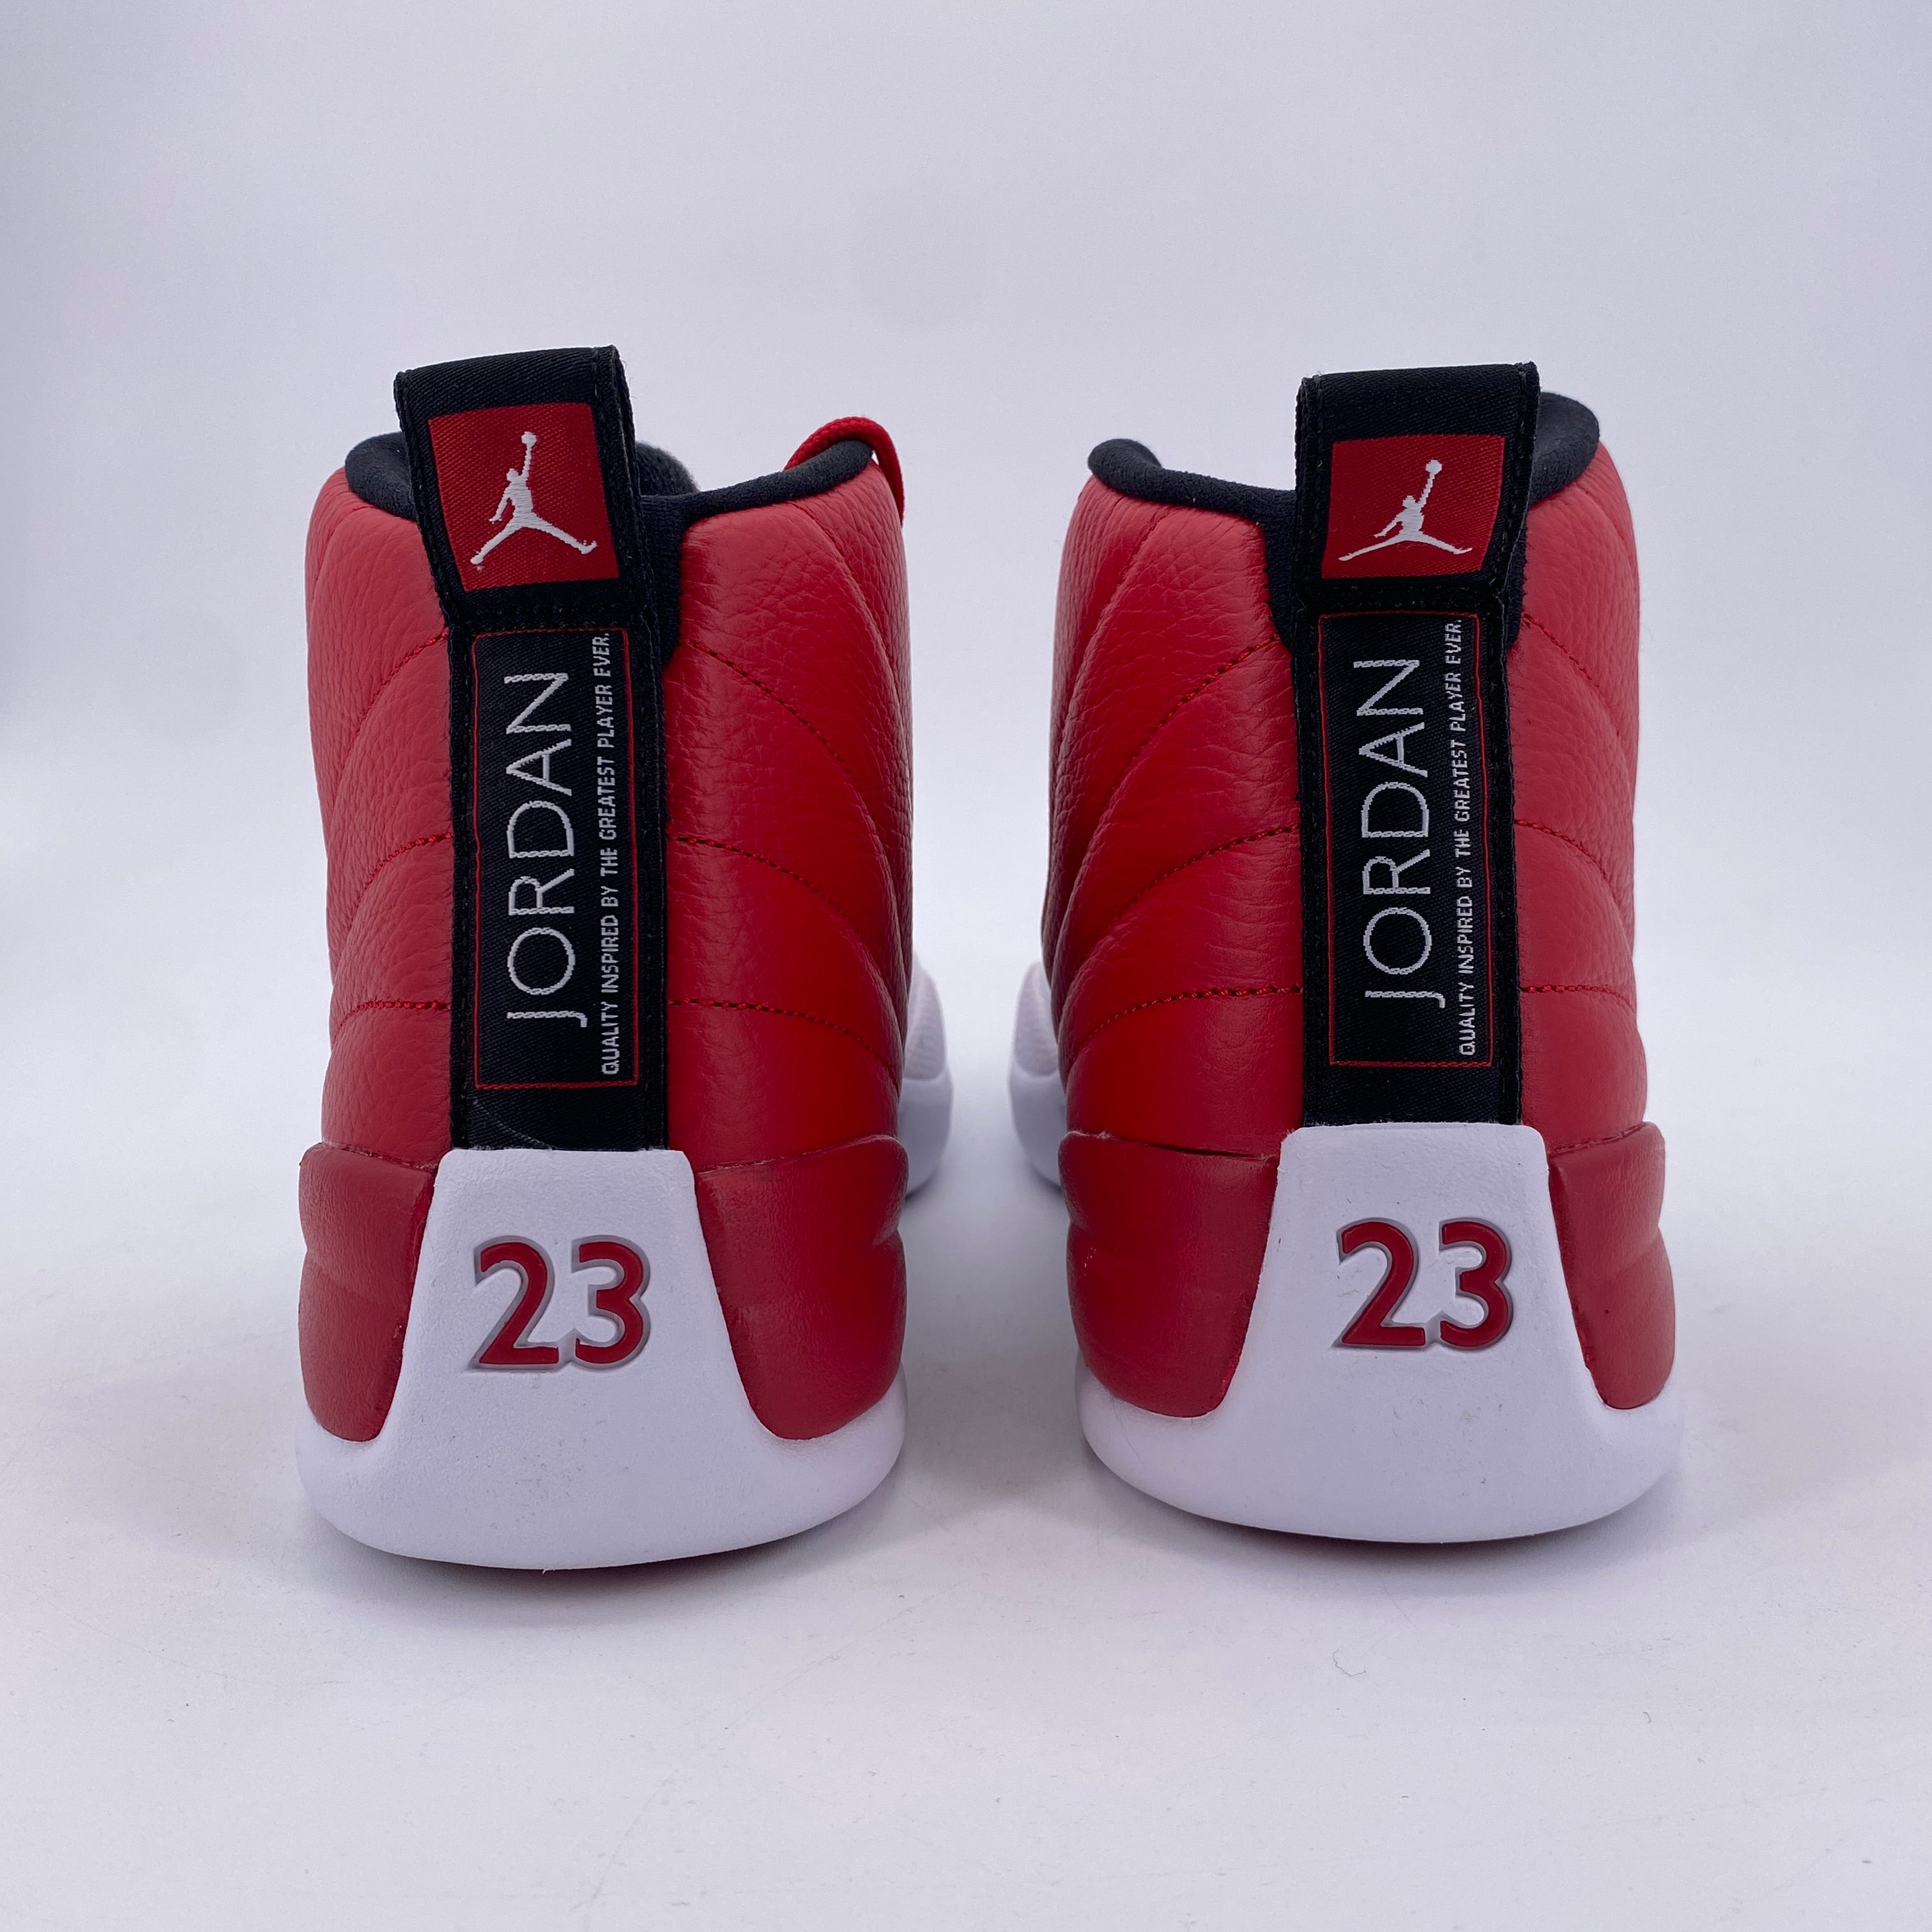 Air Jordan 12 Retro "Gym Red" 2016 New Size 12